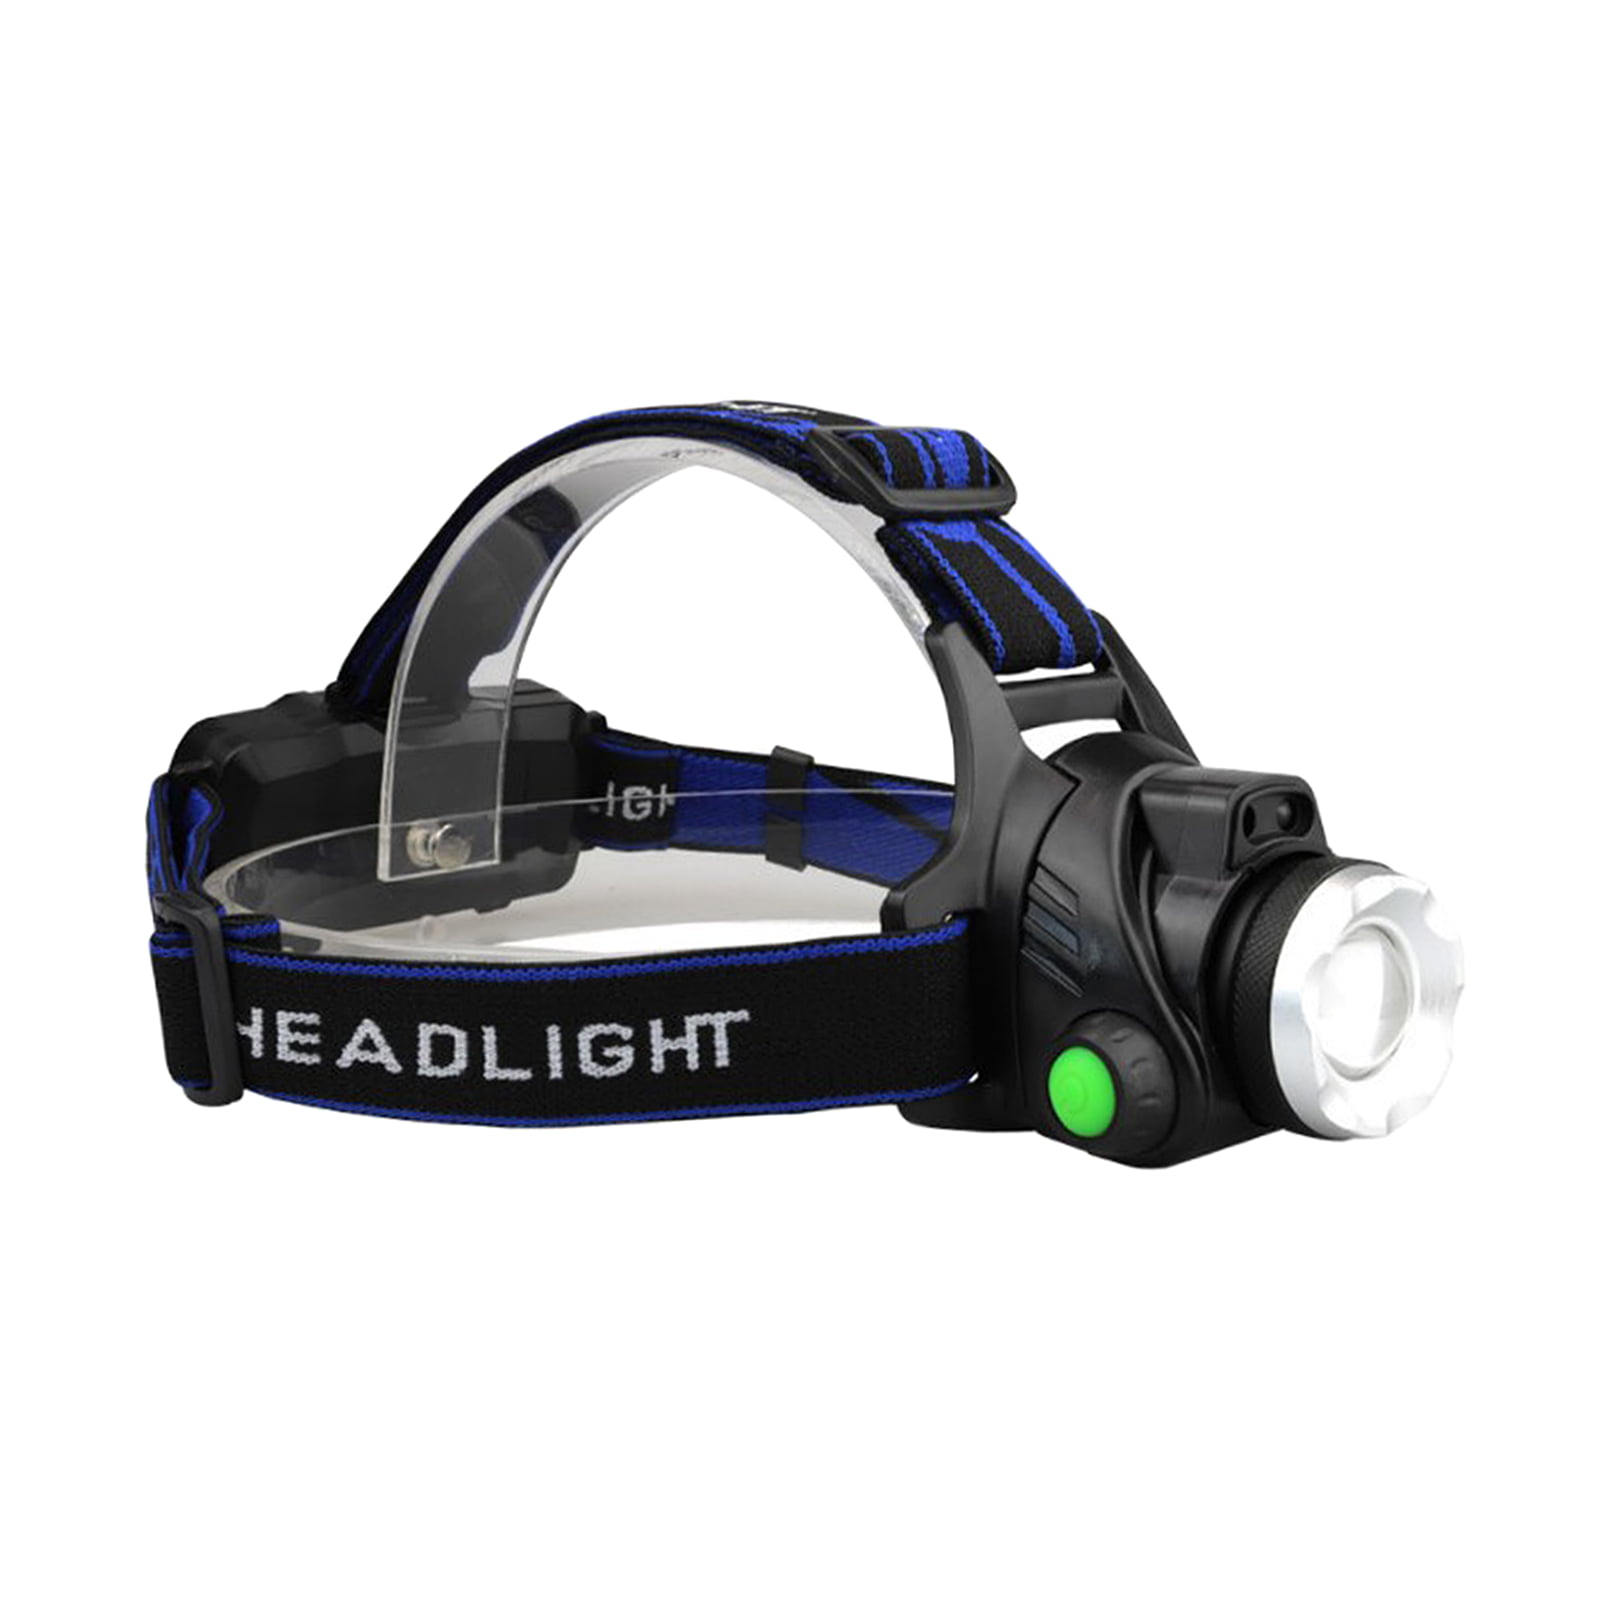 UK Rechargeable Sensor Head Torch Light Waterproof Running Camping LED Headlamp